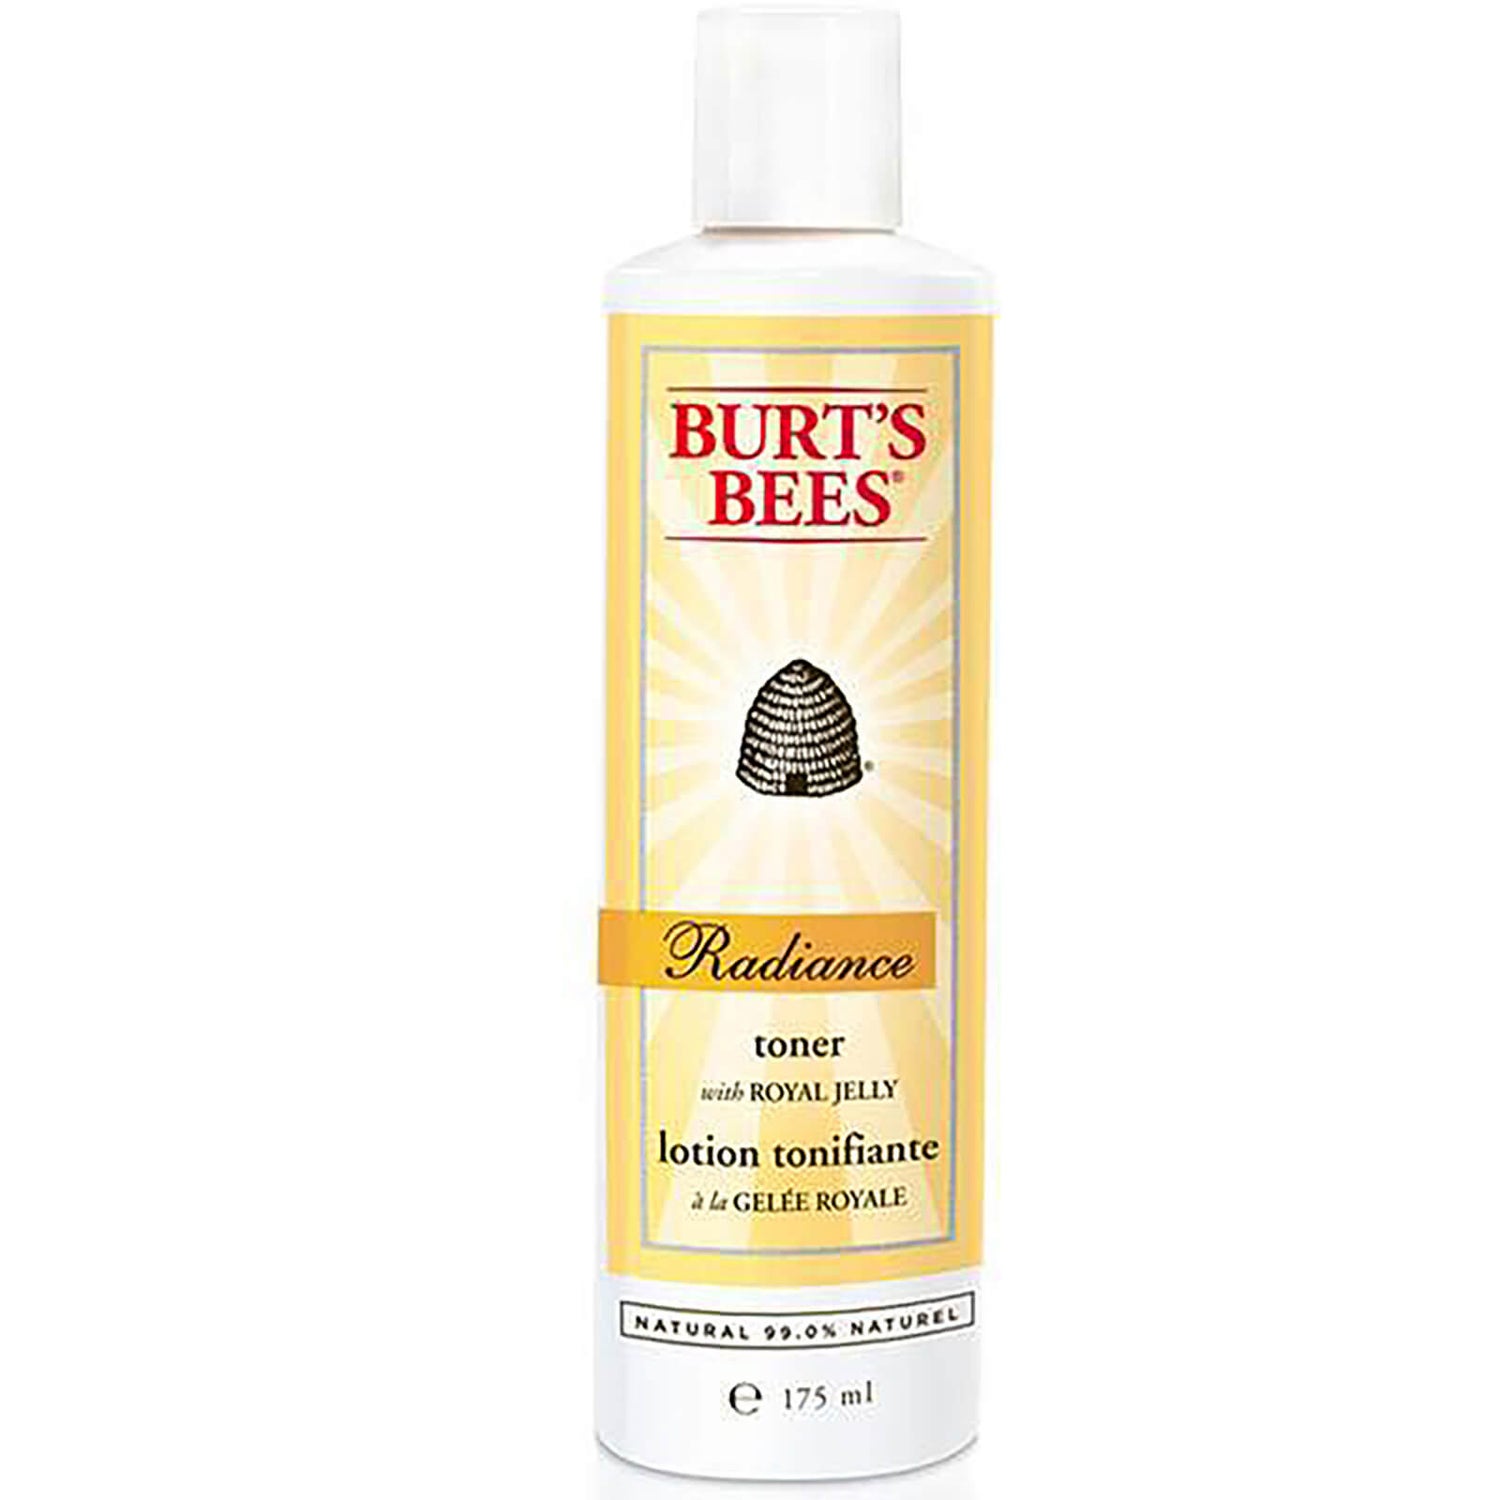 Burt's Bees Radiance Toner 6 FL OZ